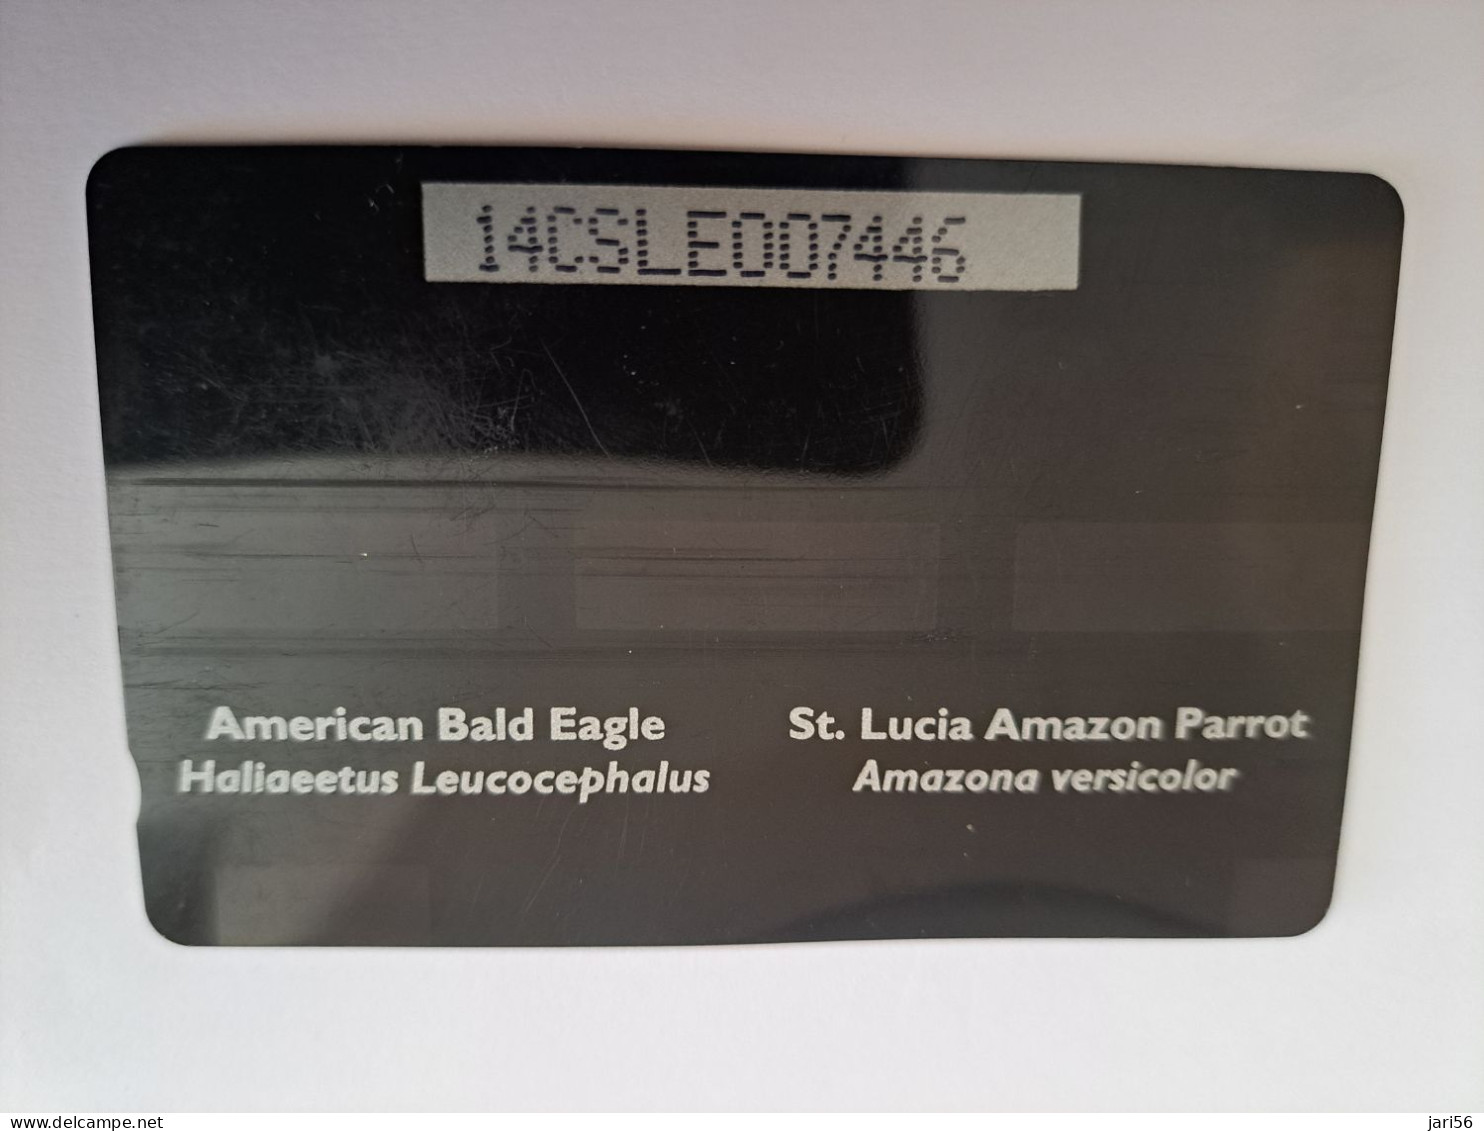 ST LUCIA    $ 53/ US 20  CABLE & WIRELESS  STL-14E  11CSLA    PARROT/EAGLE  Fine Used Card ** 13596** - St. Lucia